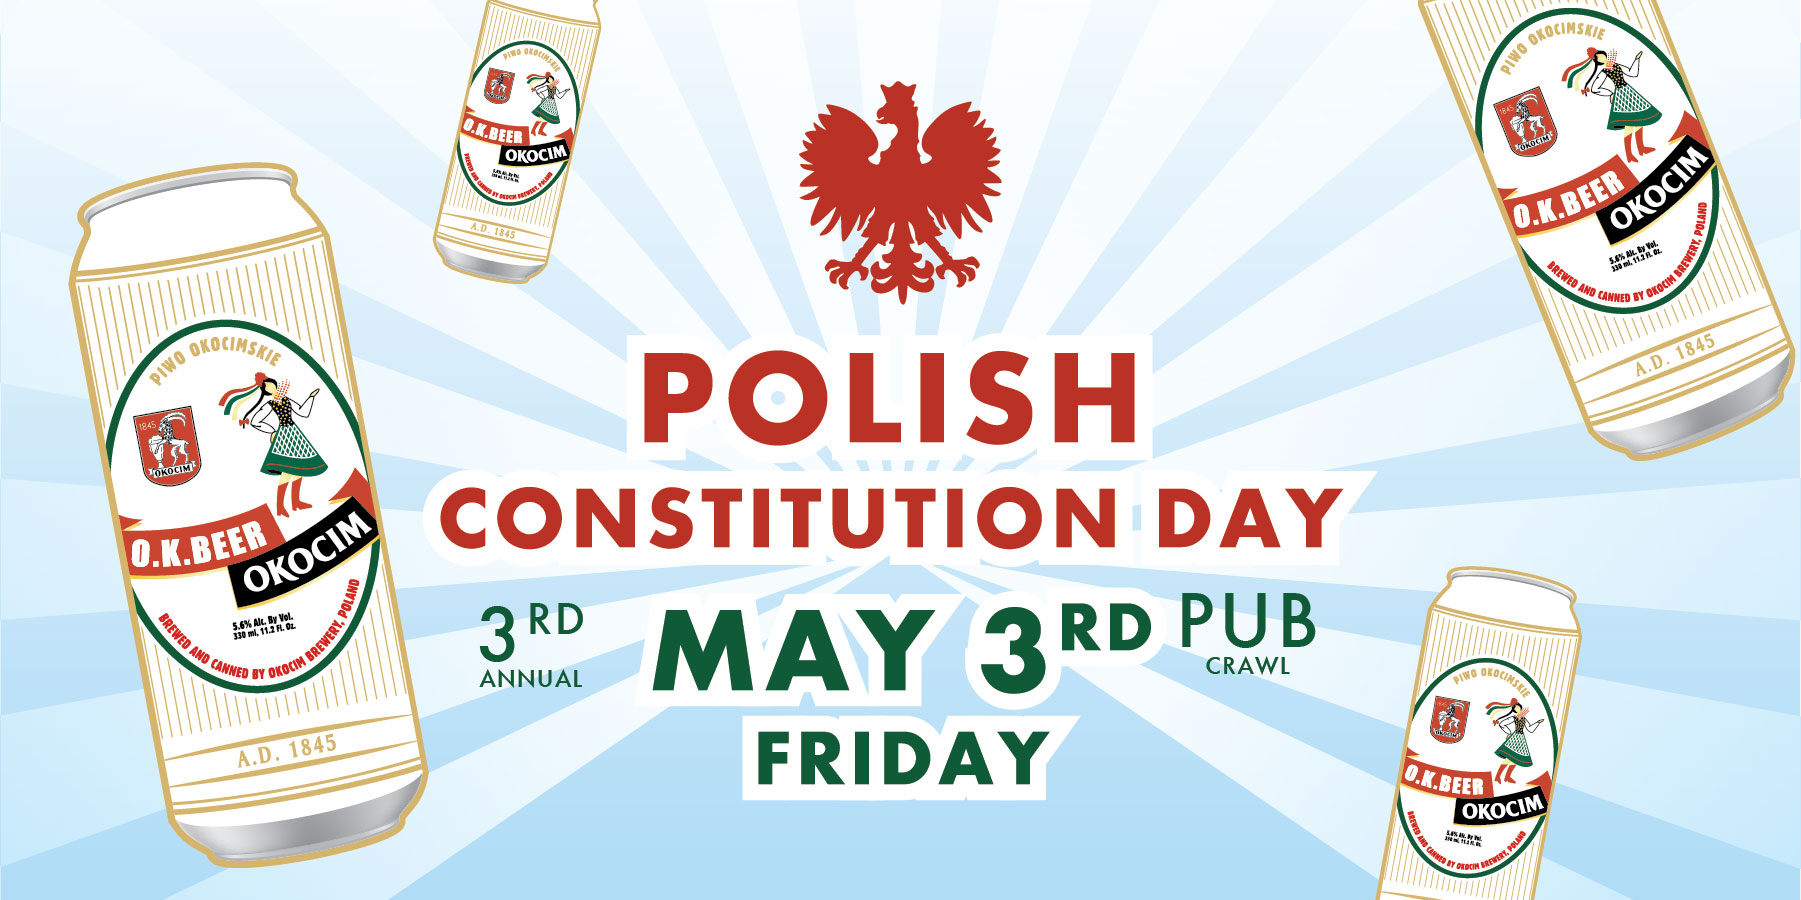 Okocim Polish Constitution Day